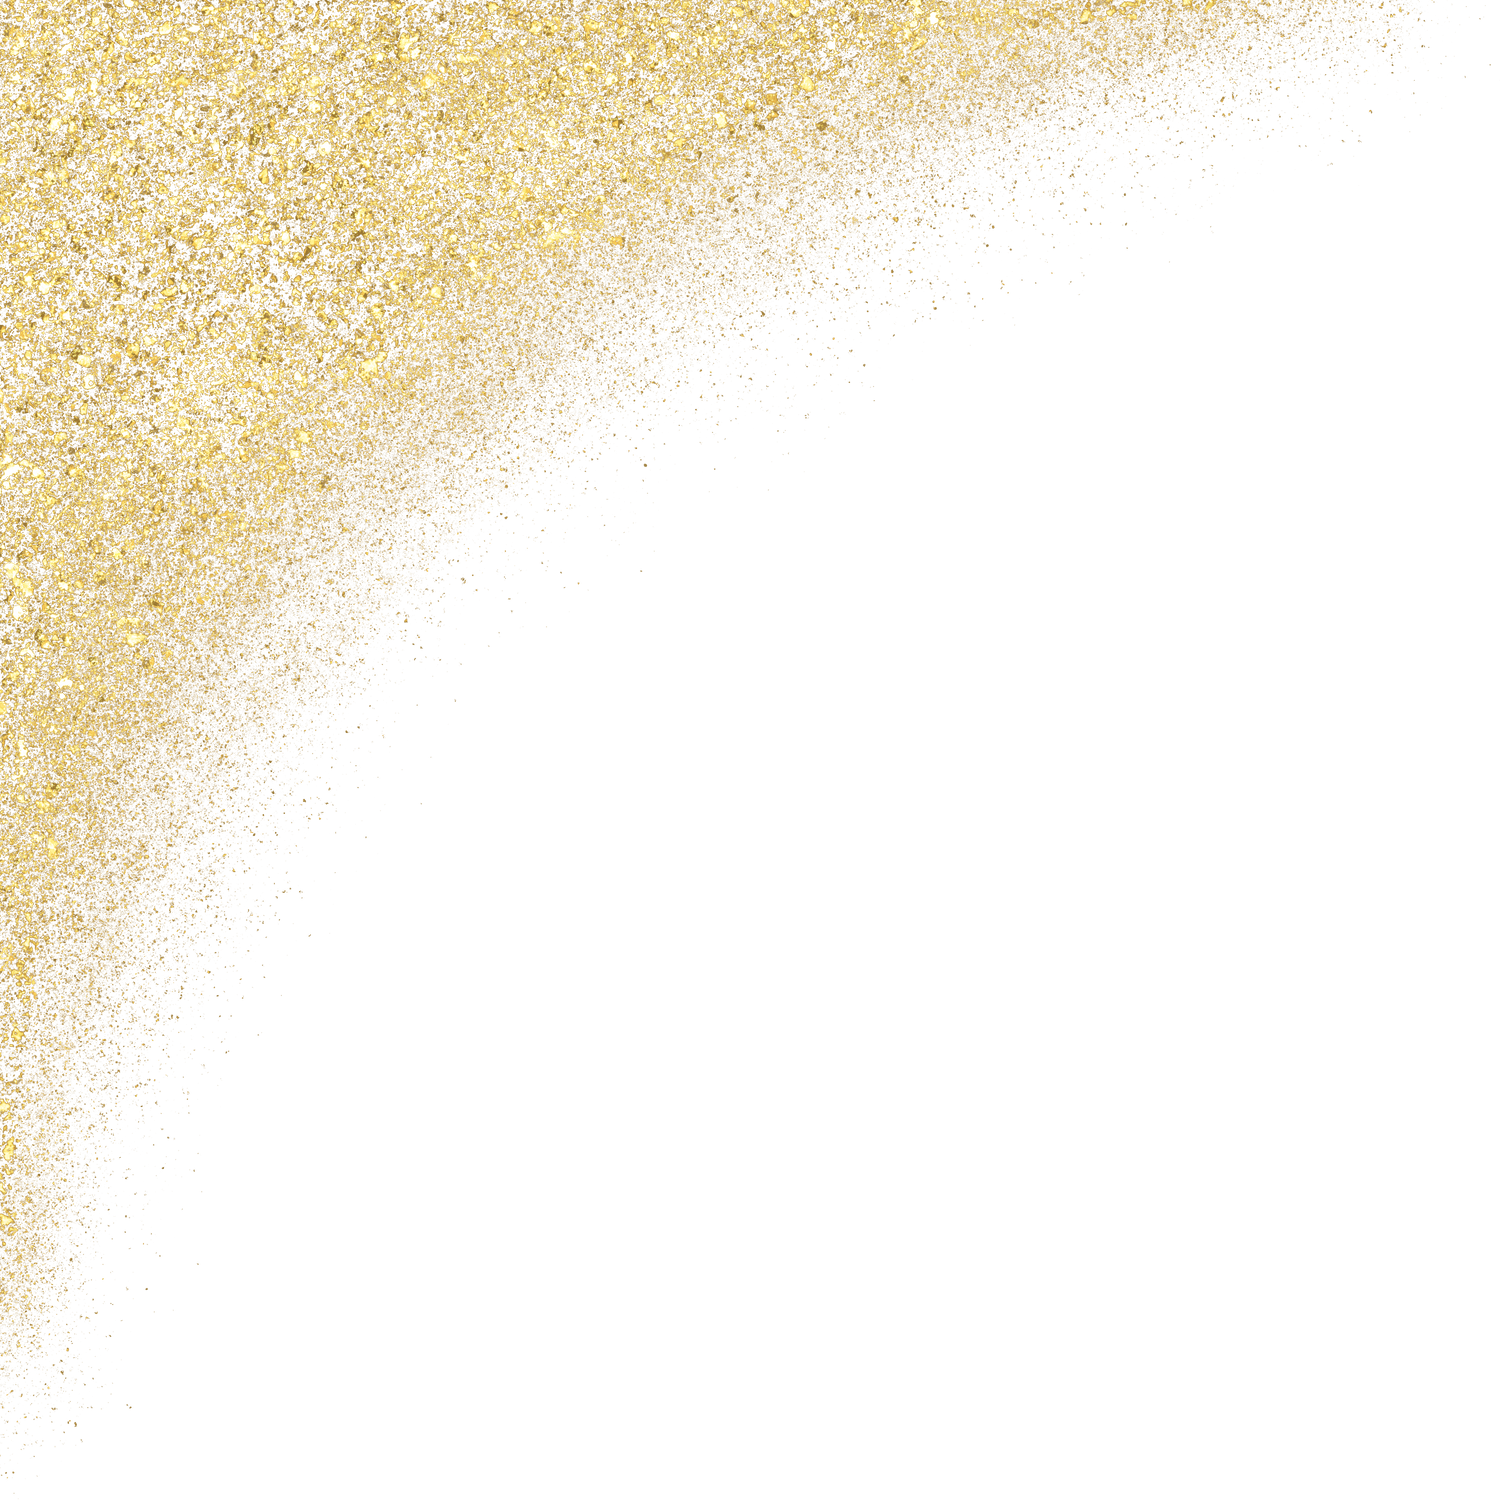 gold glitter shiny sprinkles corner